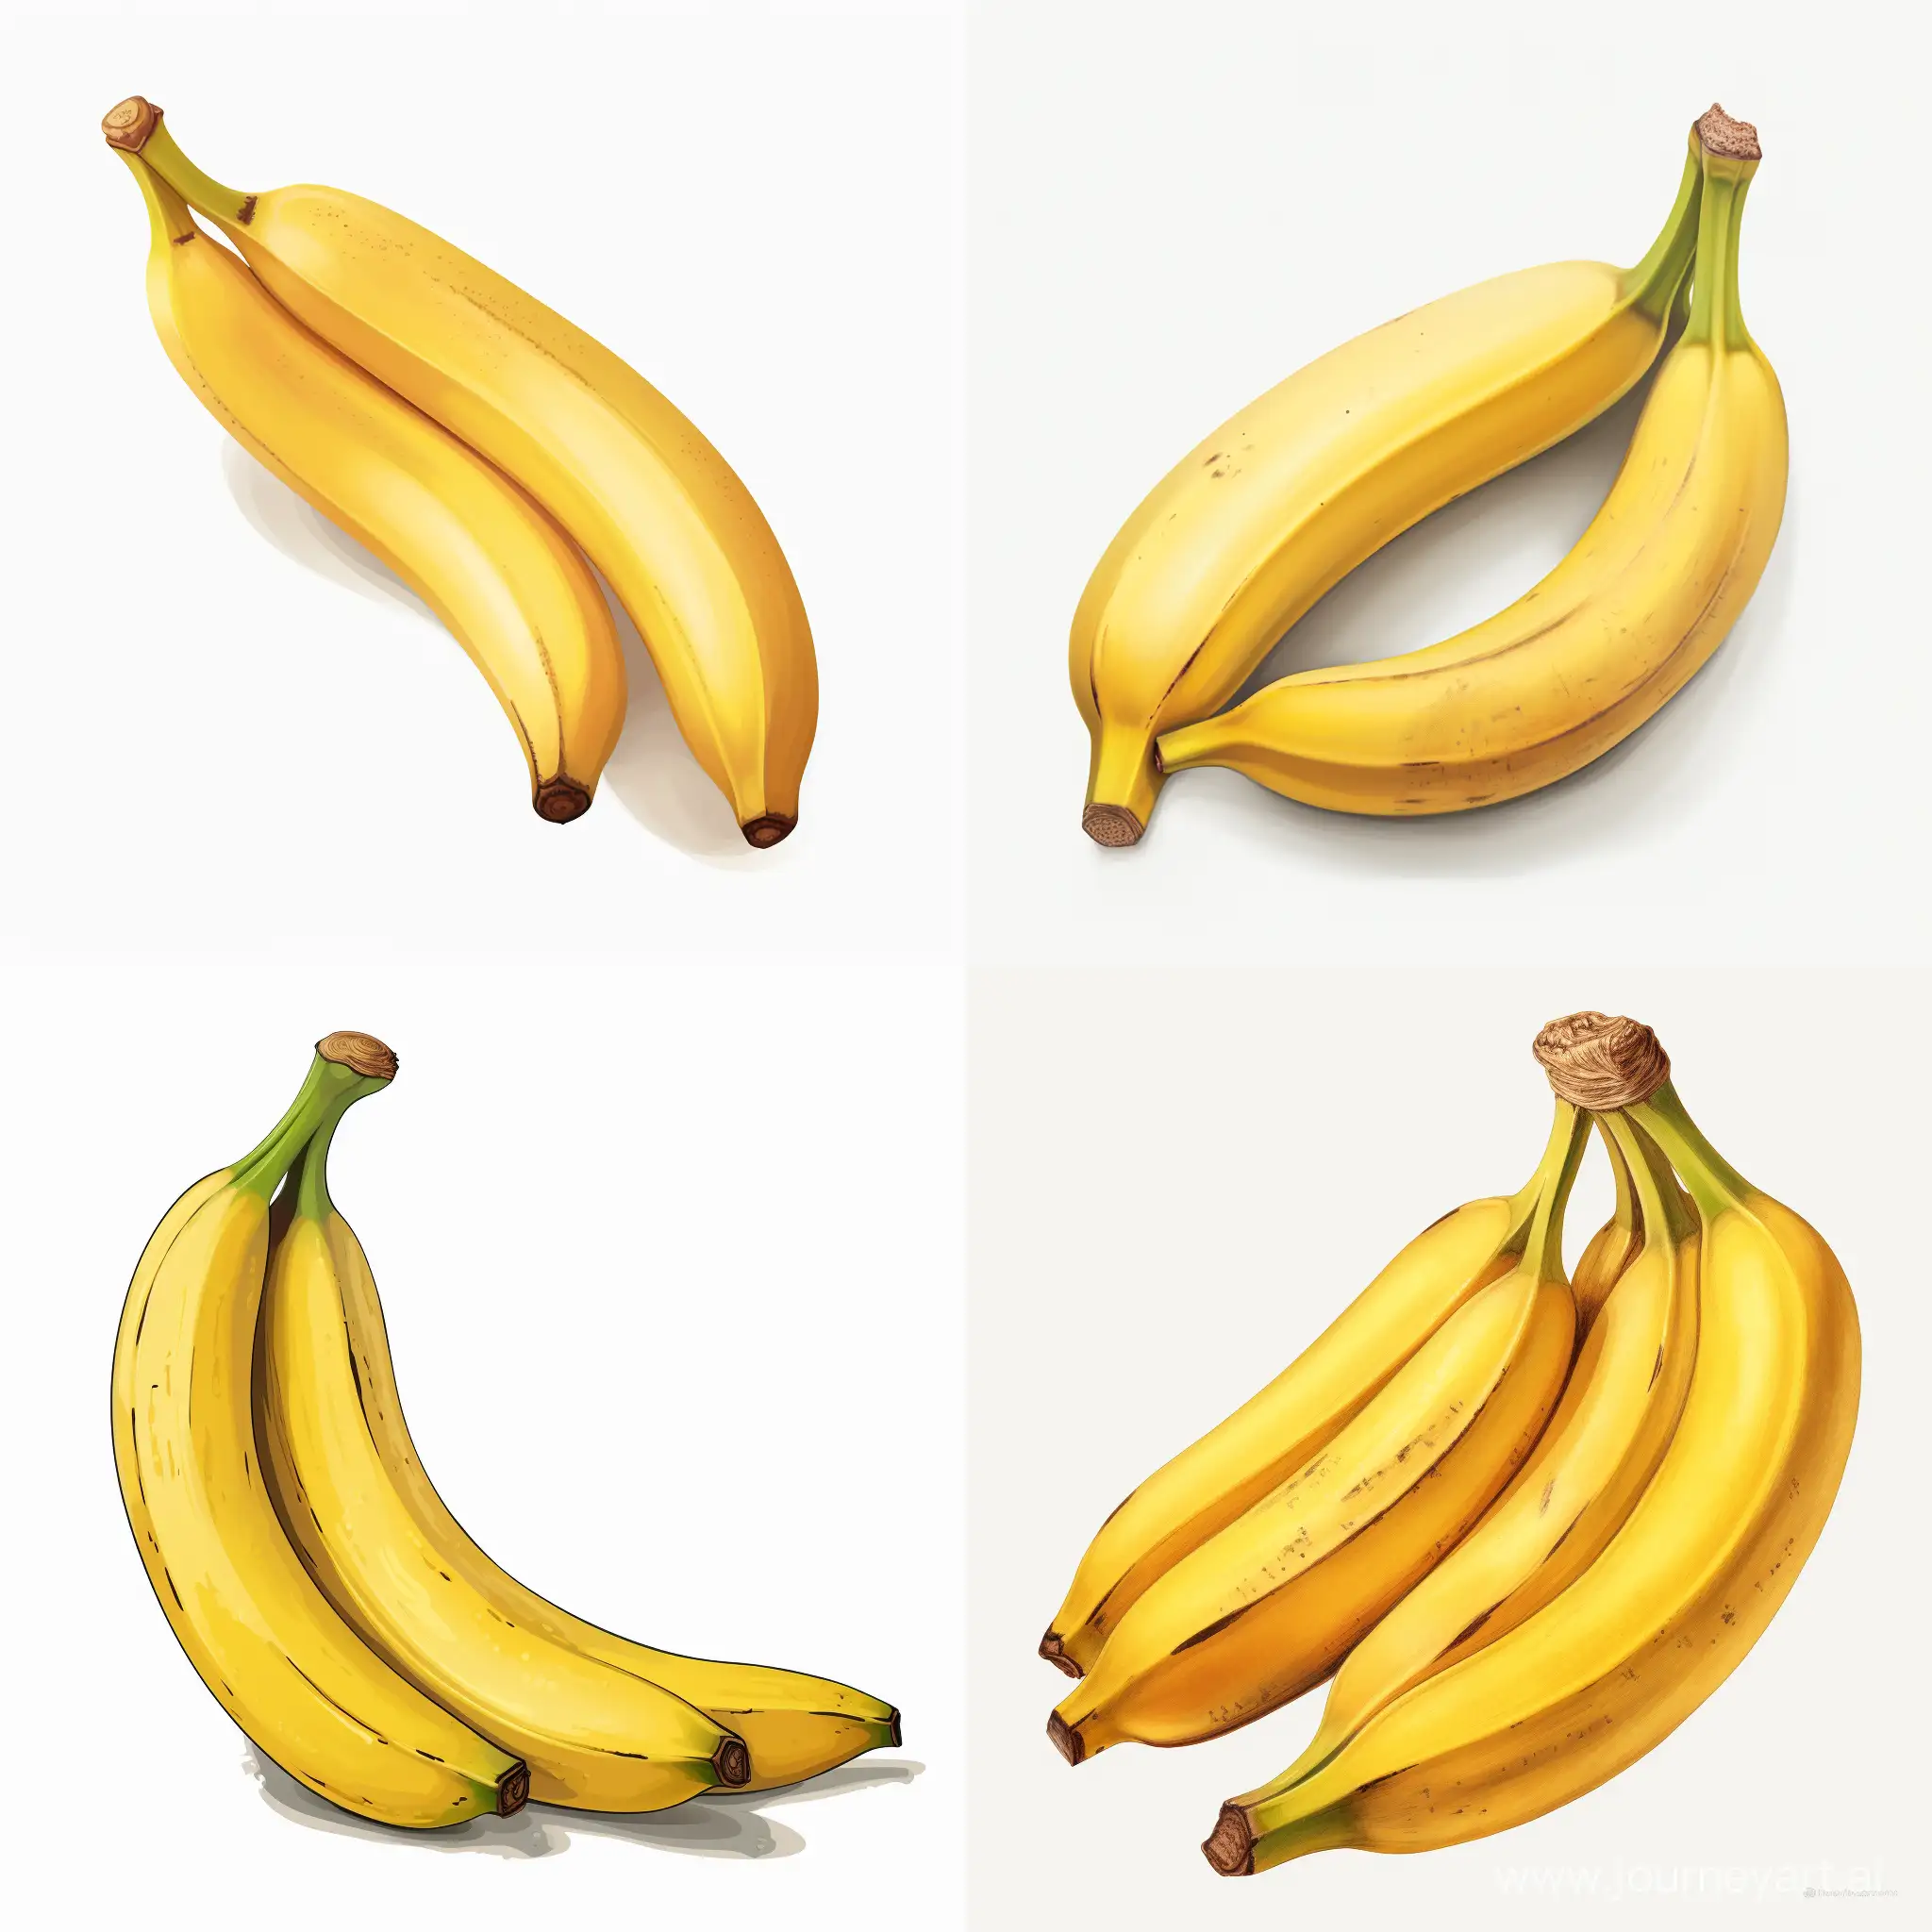 Realistic-Banana-on-White-Background